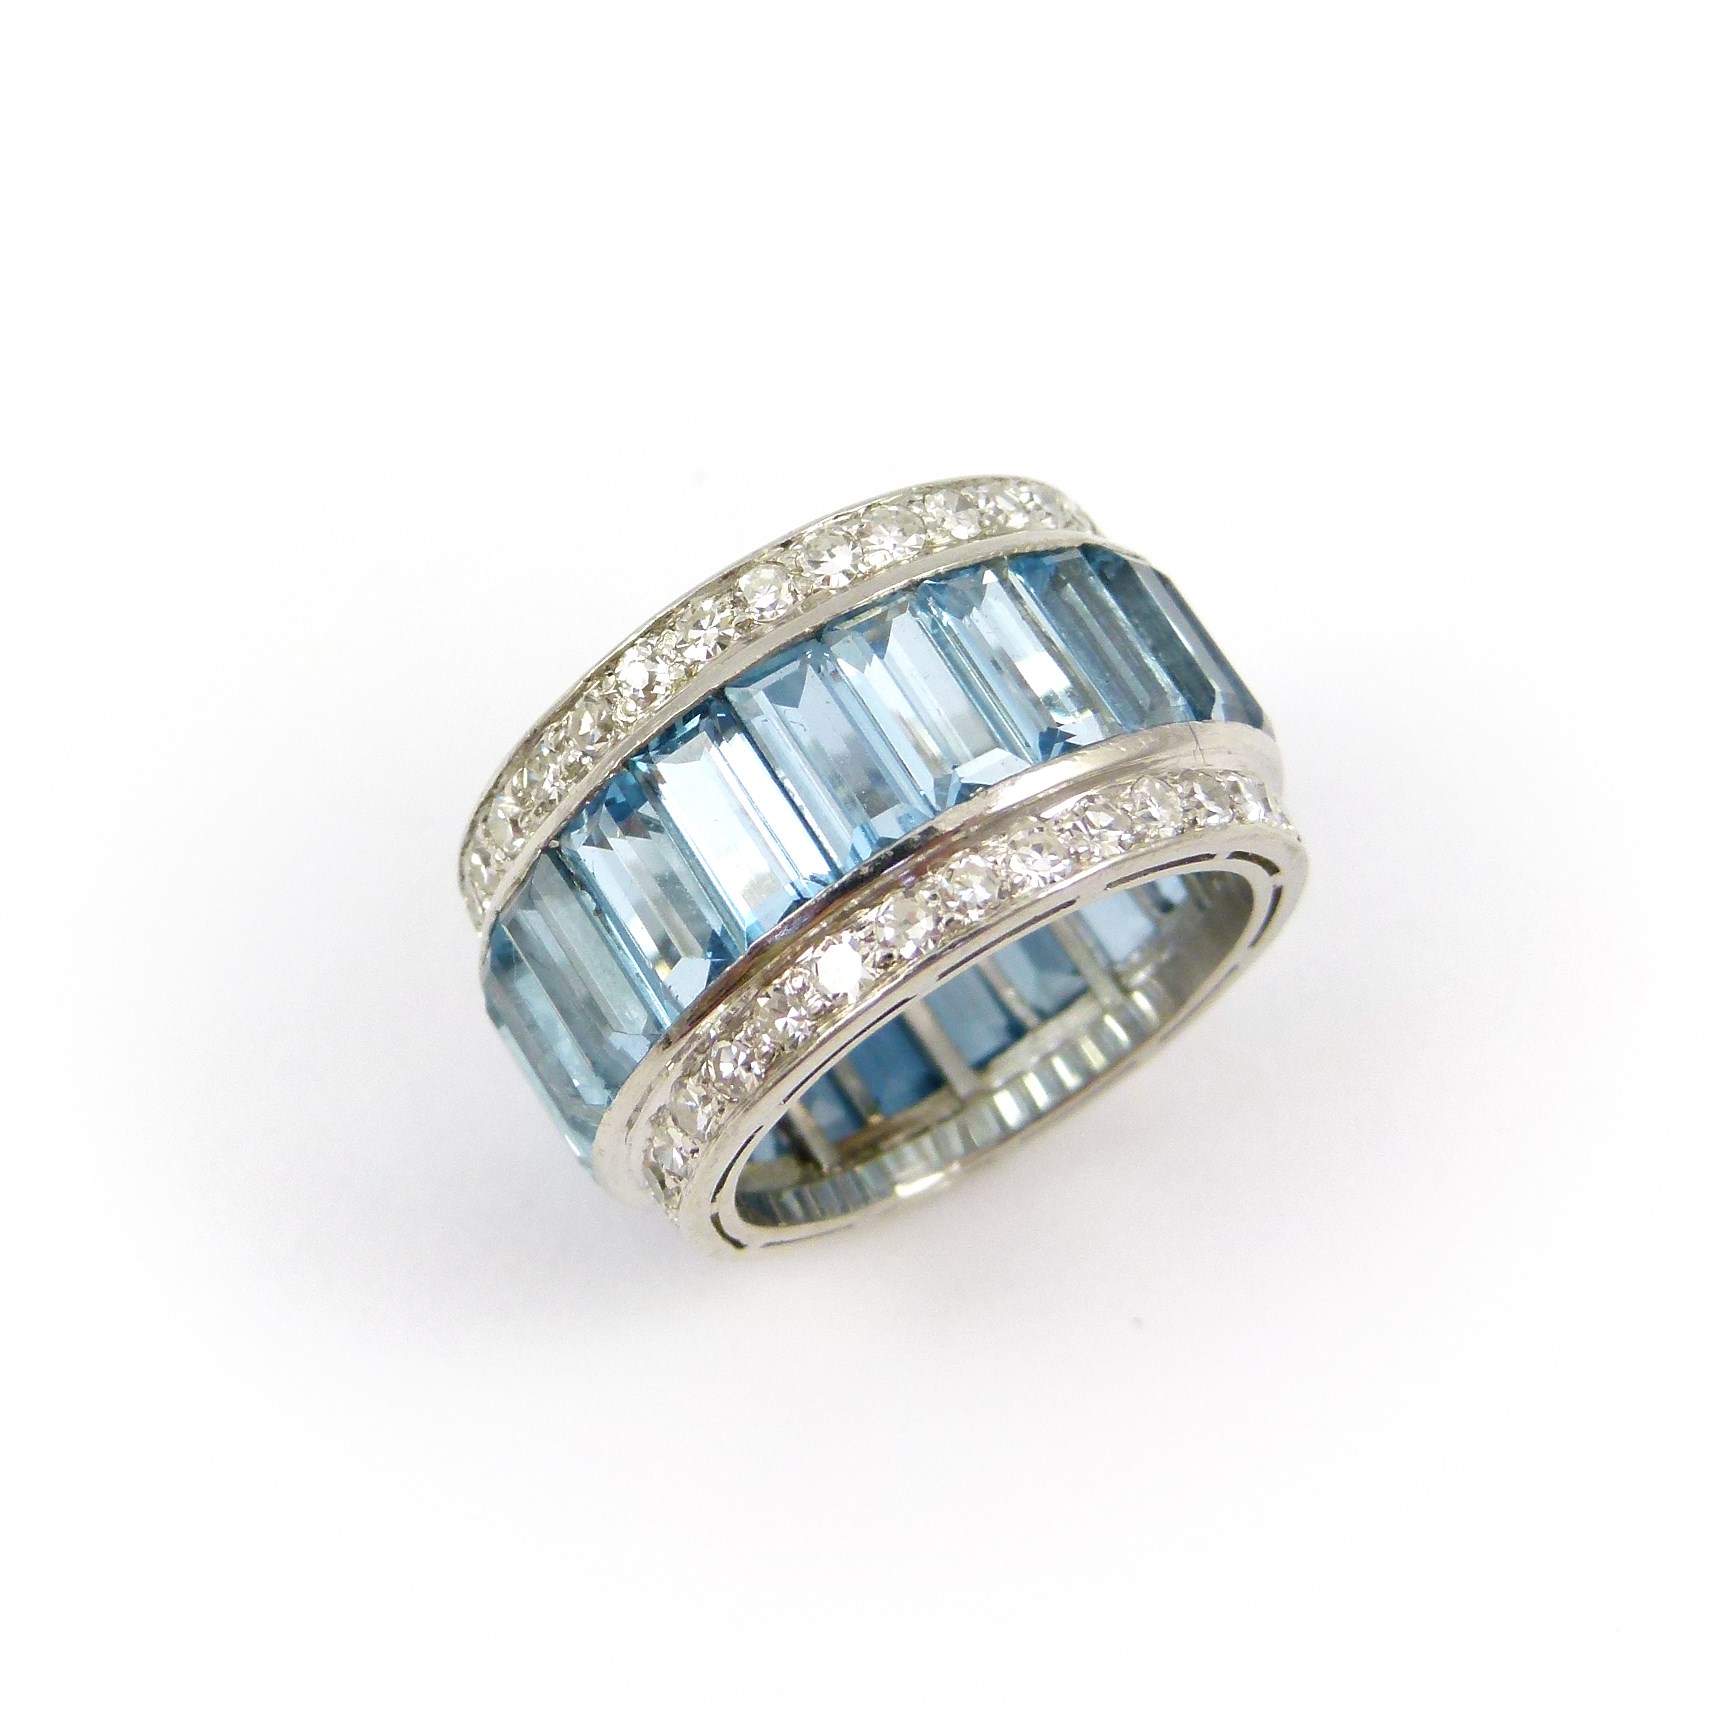 Aquamarine and diamond band ring by 